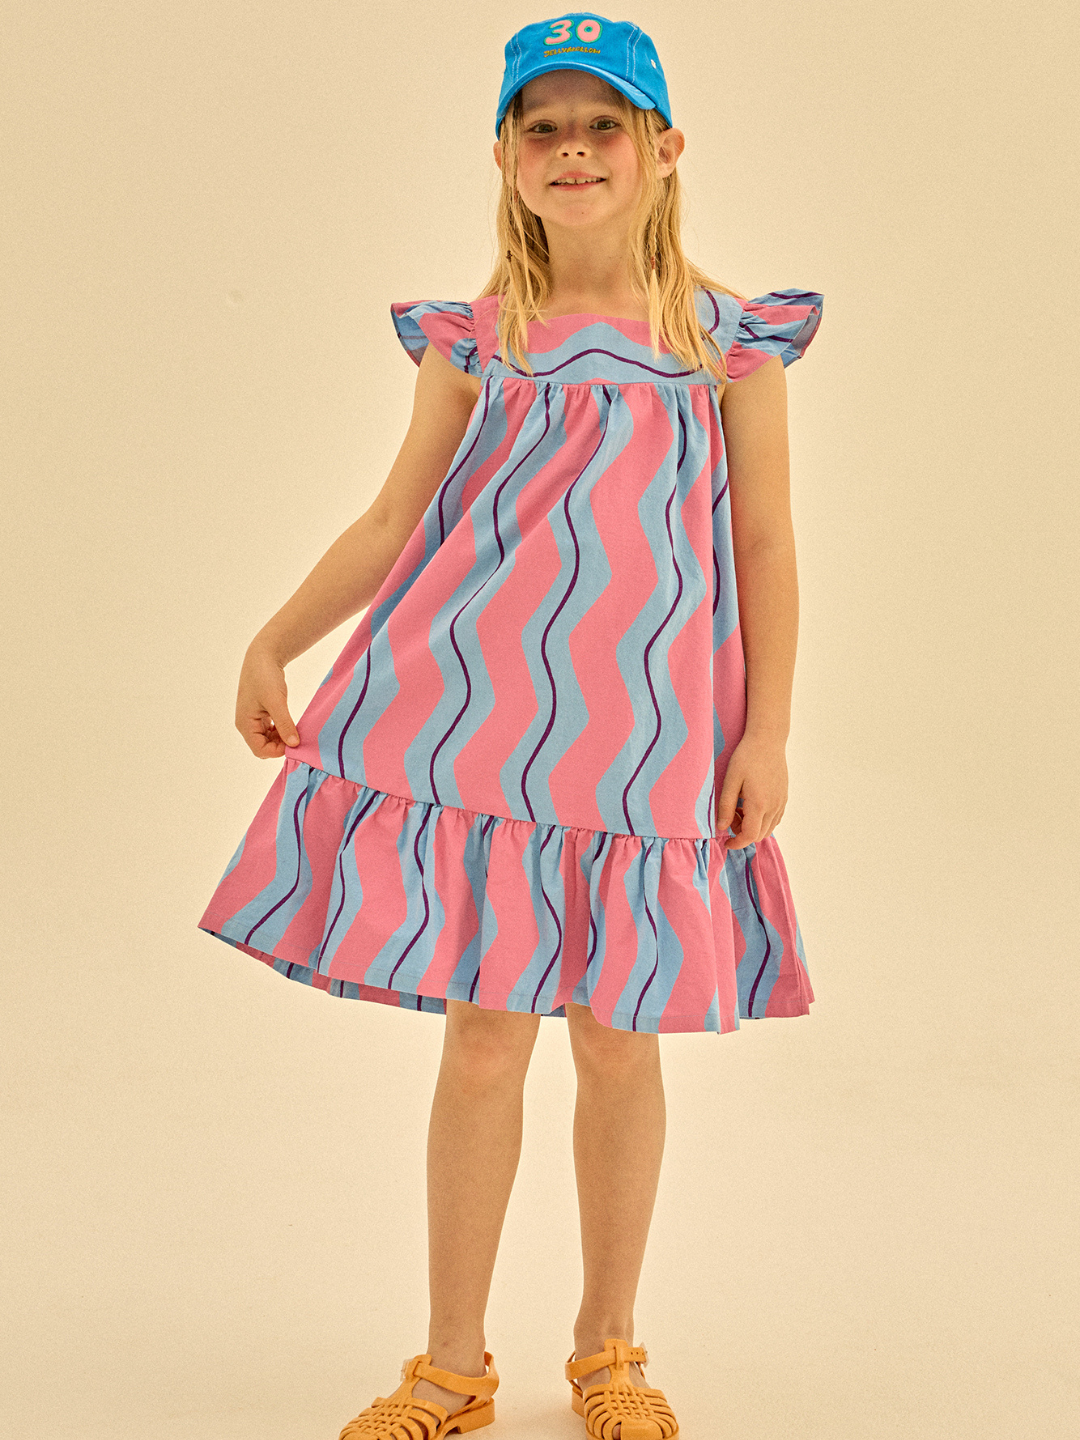 Child wearing Wave Stripe Dress.